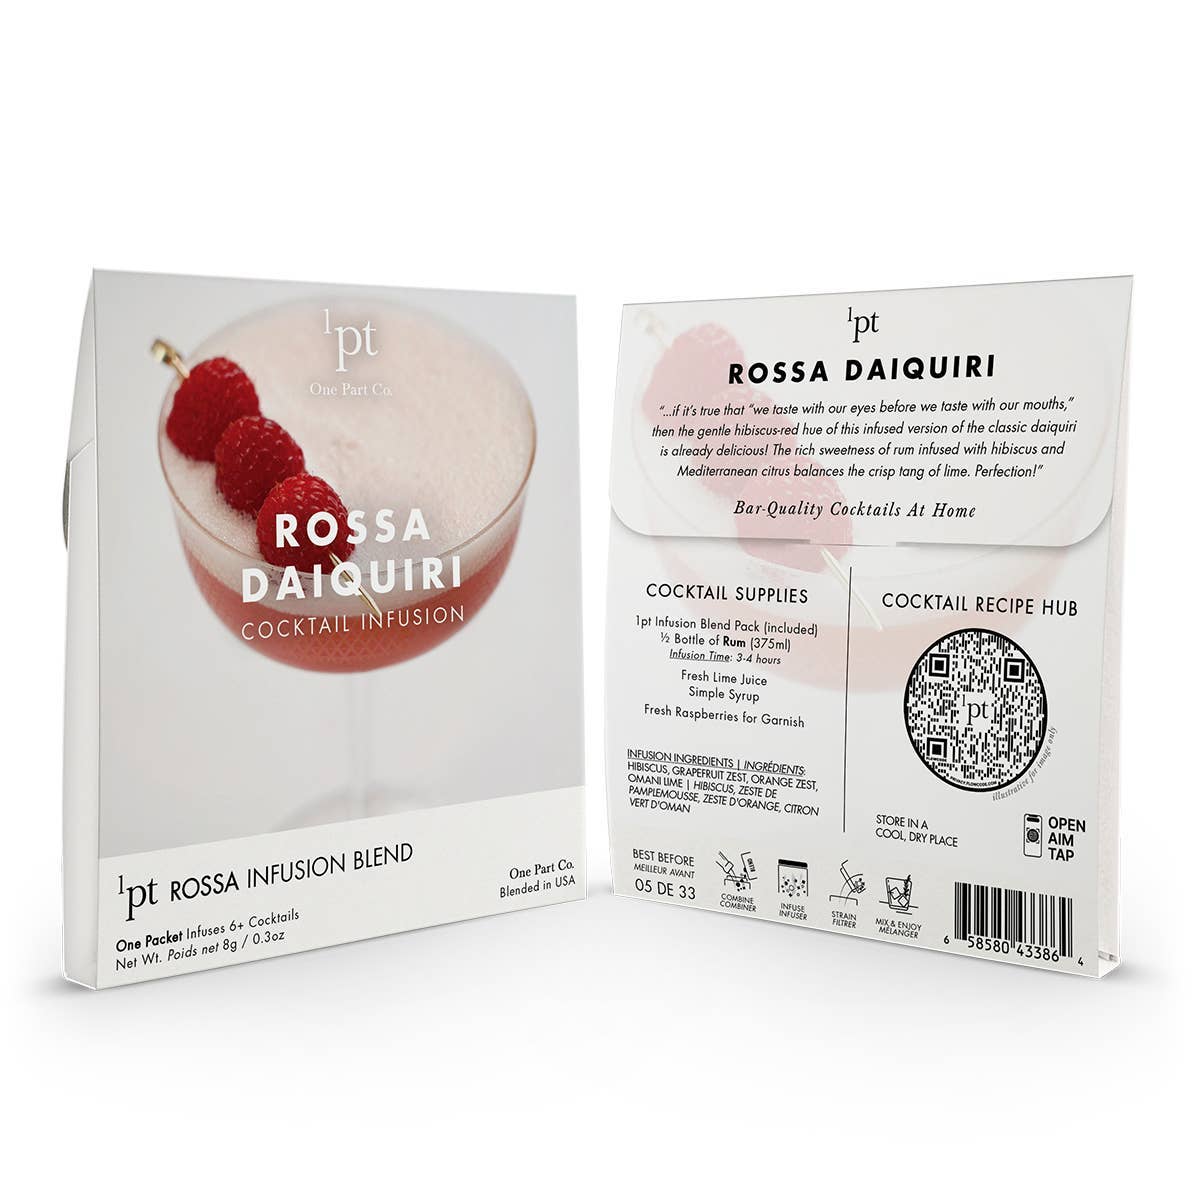 Rossa Daiquiri Cocktail Infusion Kit